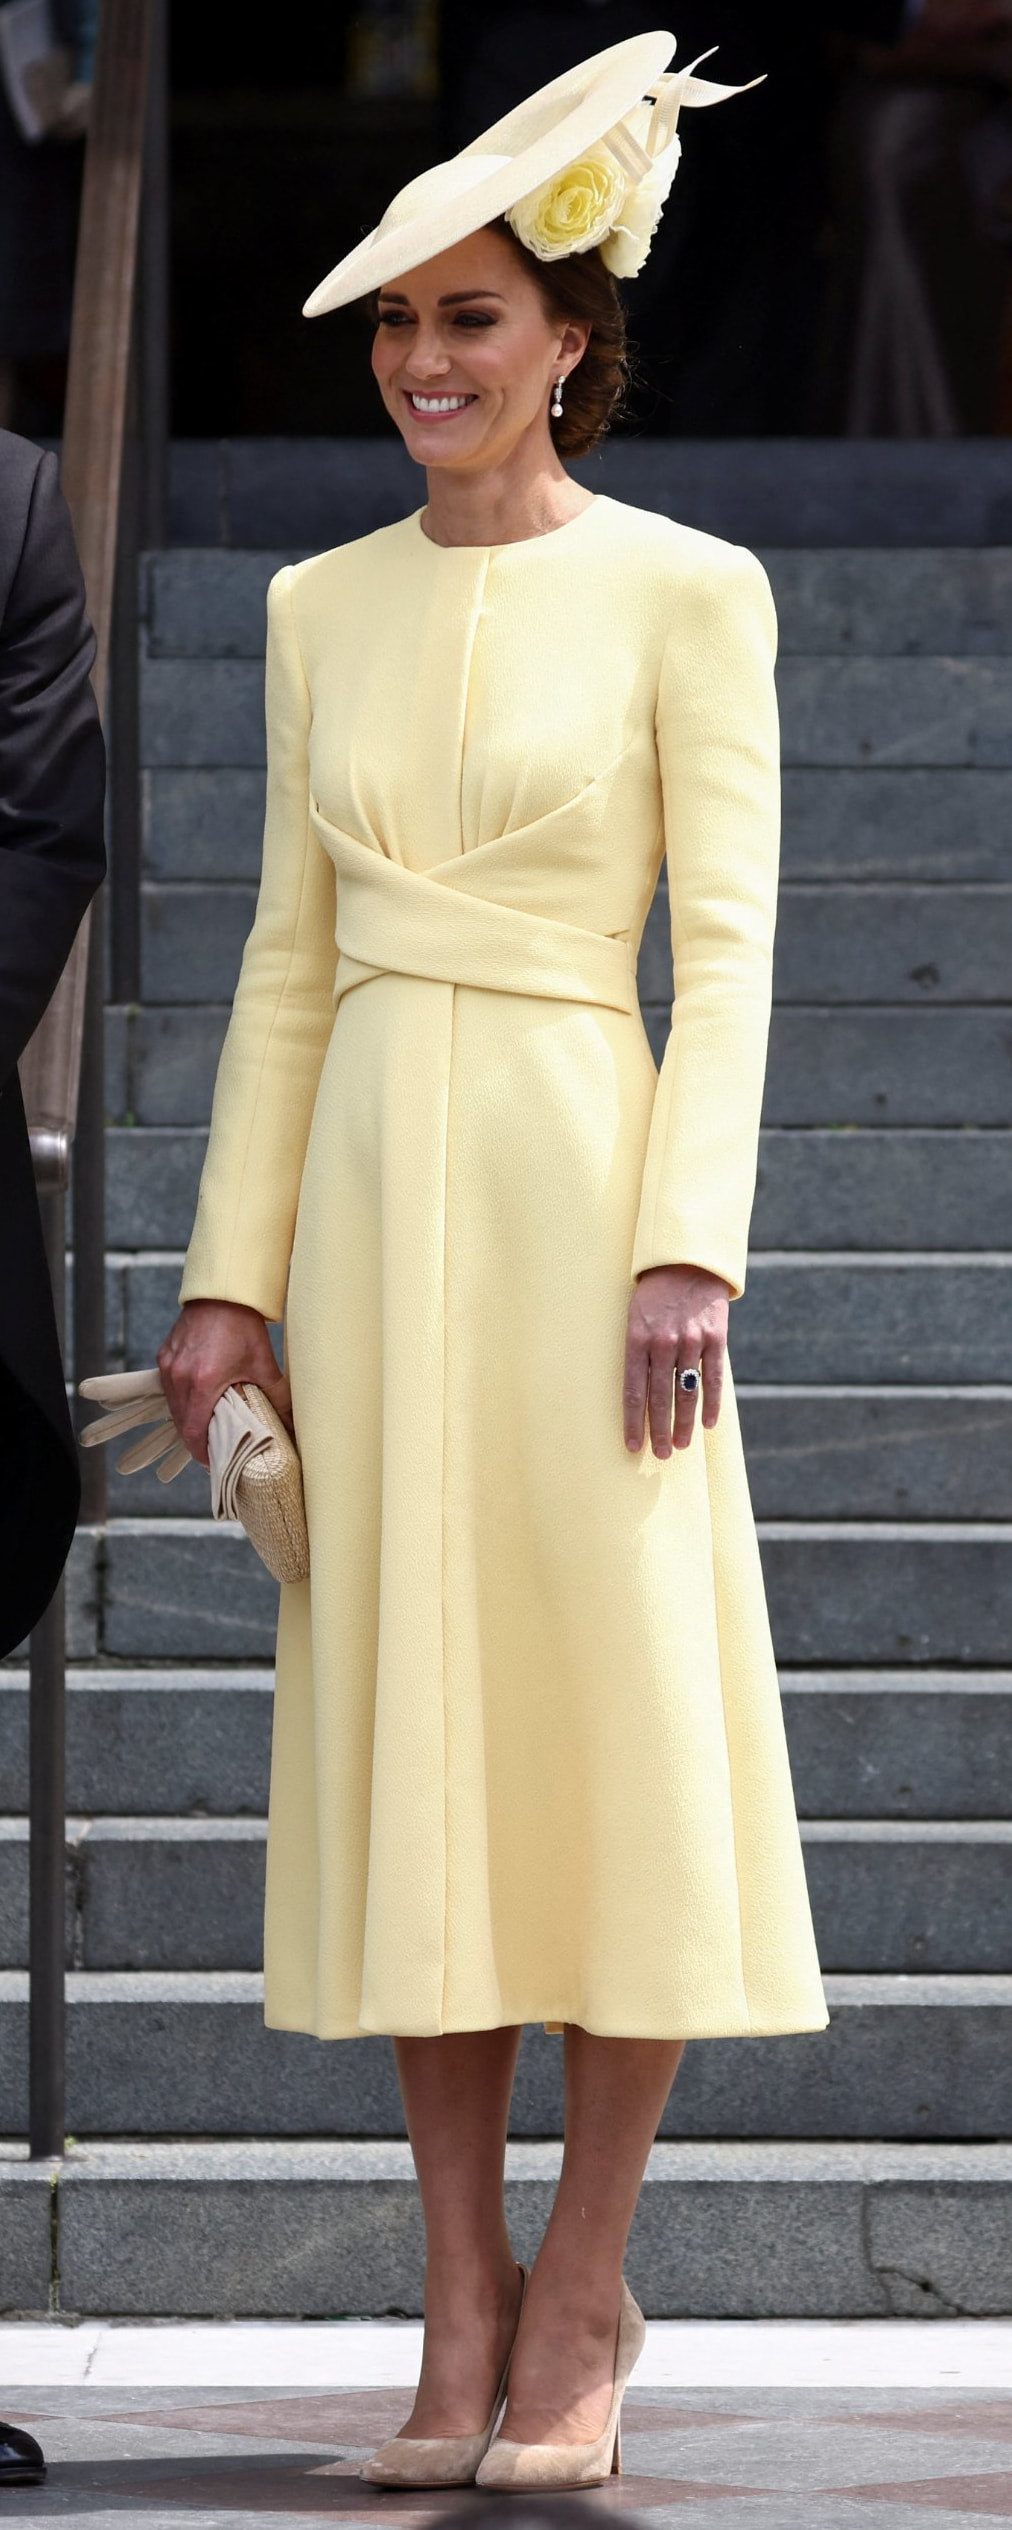 Emilia Wickstead Elta Coatdress in Pastel Yellow as seen on Kate Middleton, Duchess of Cambridge.